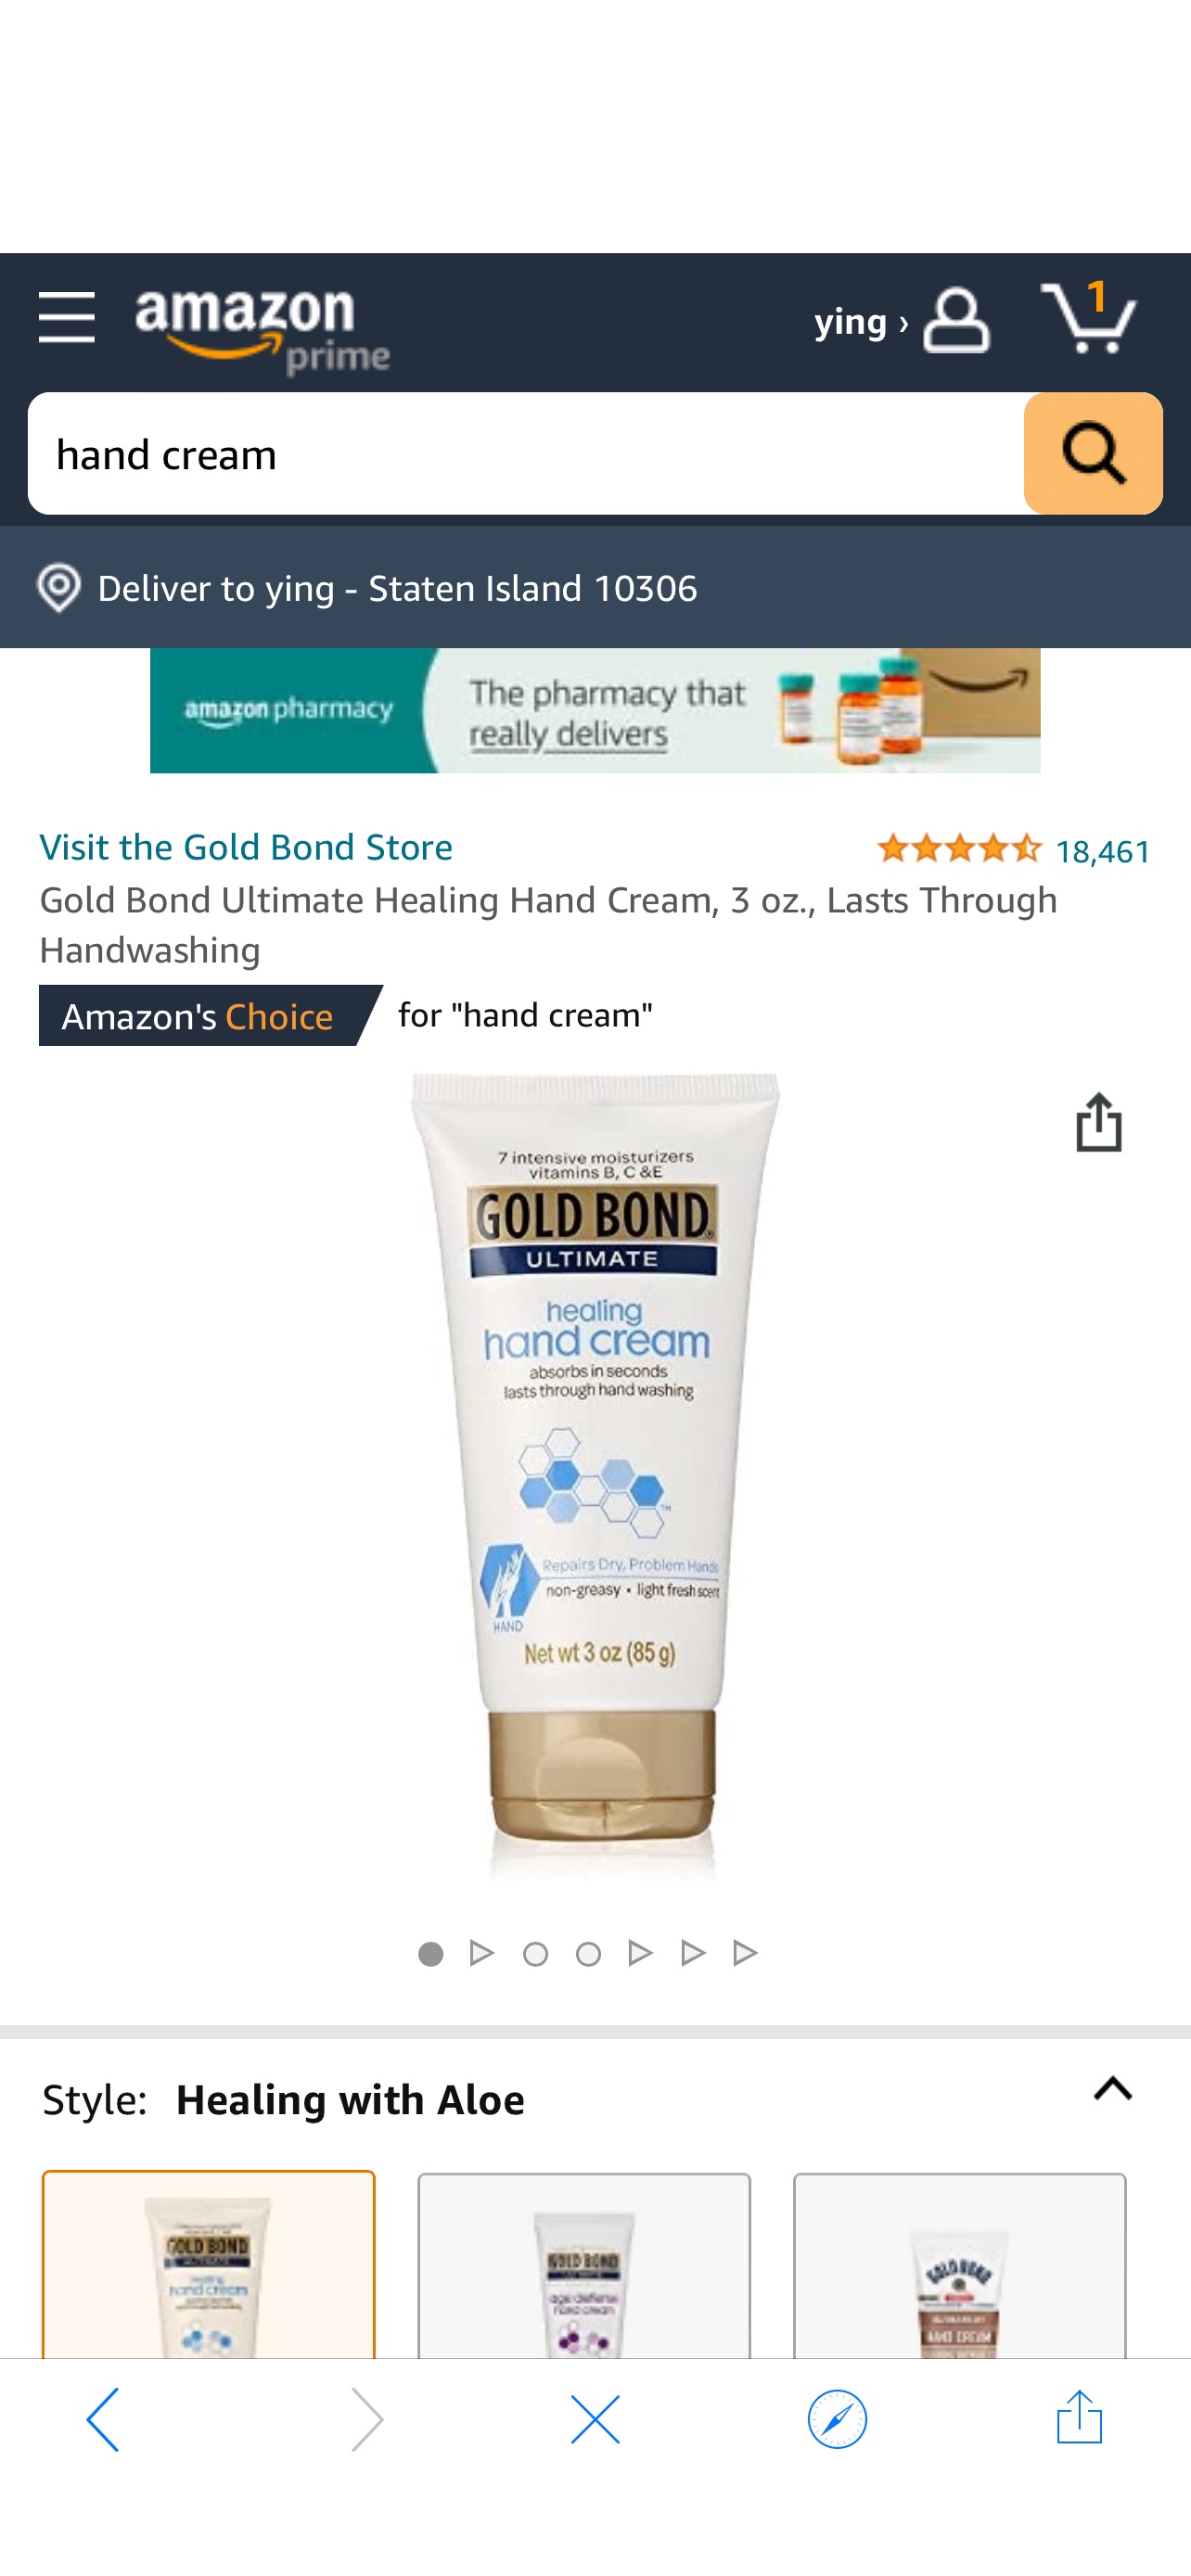 Amazon.com: Gold Bond Ultimate Healing Hand Cream, 3 oz., Lasts Through Handwashing